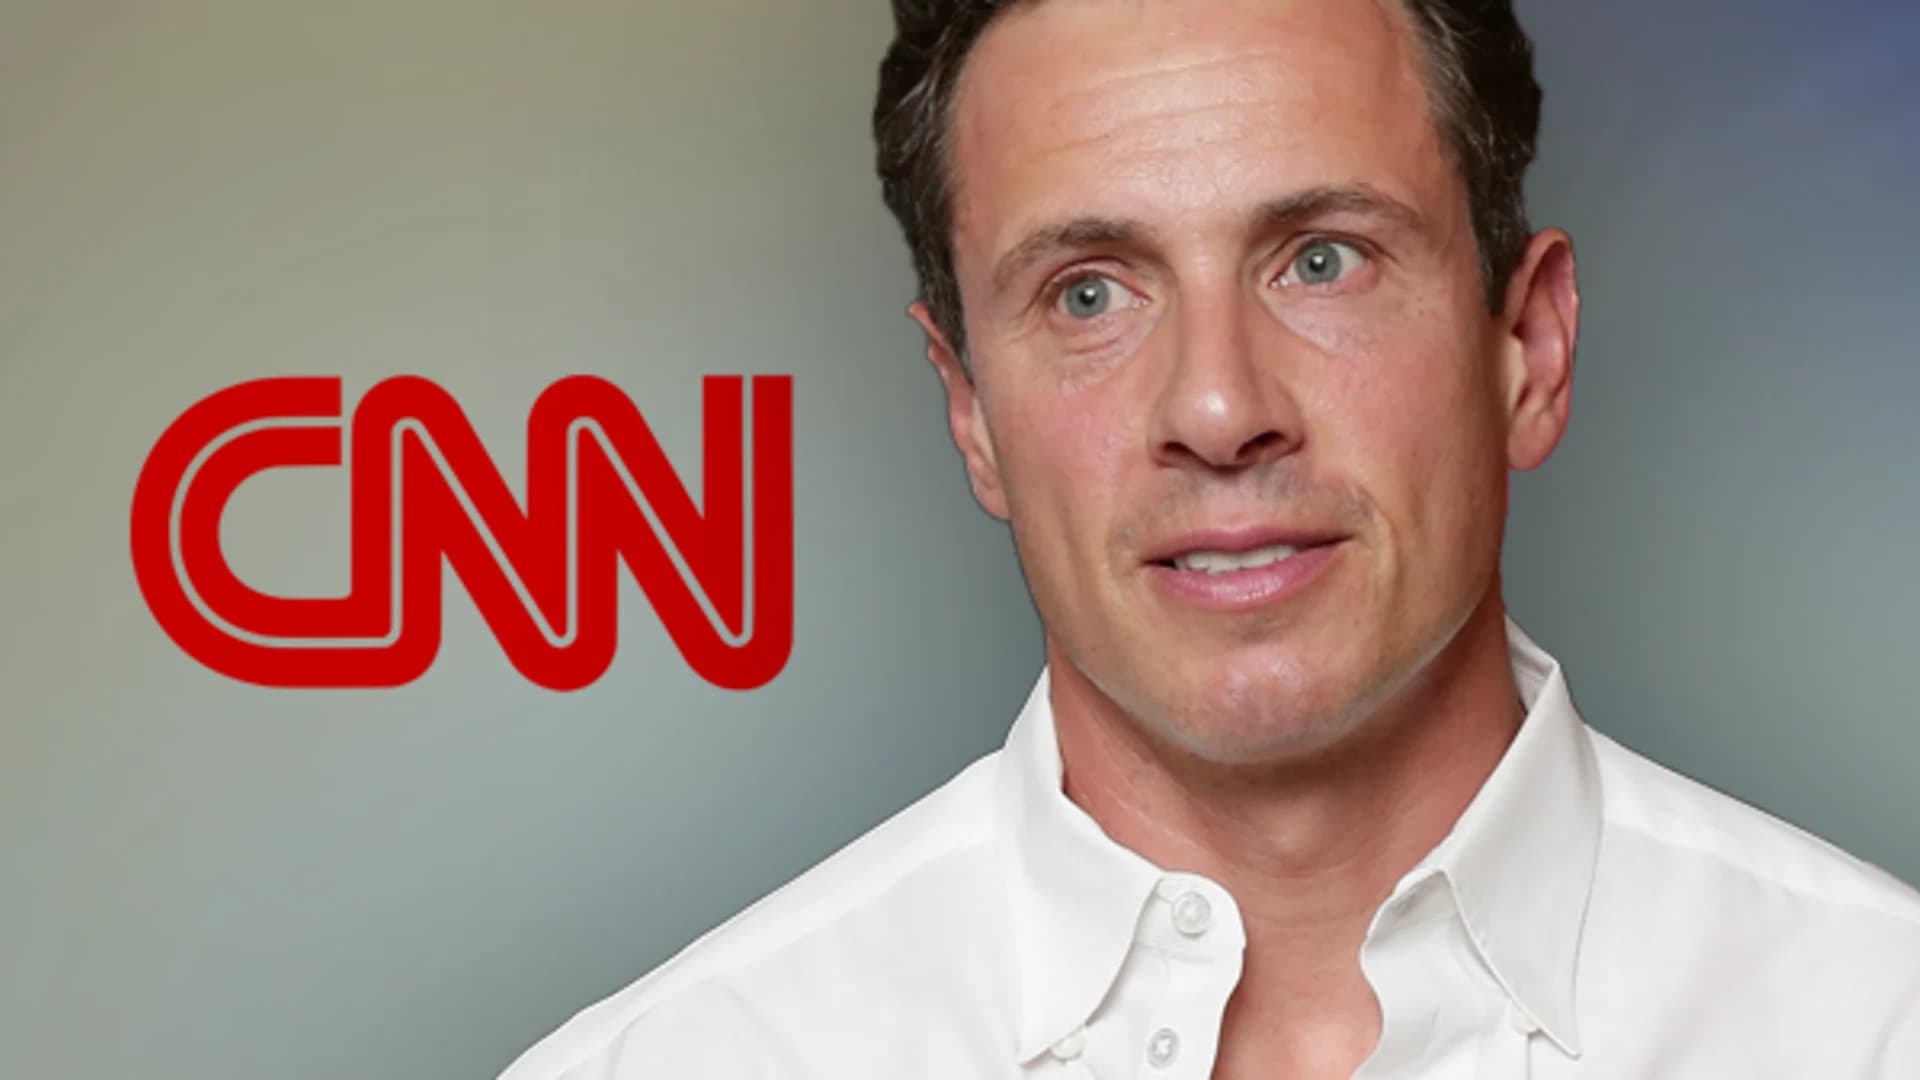 CNN anchor Chris Cuomo announces in tweet he tested positive for coronavirus